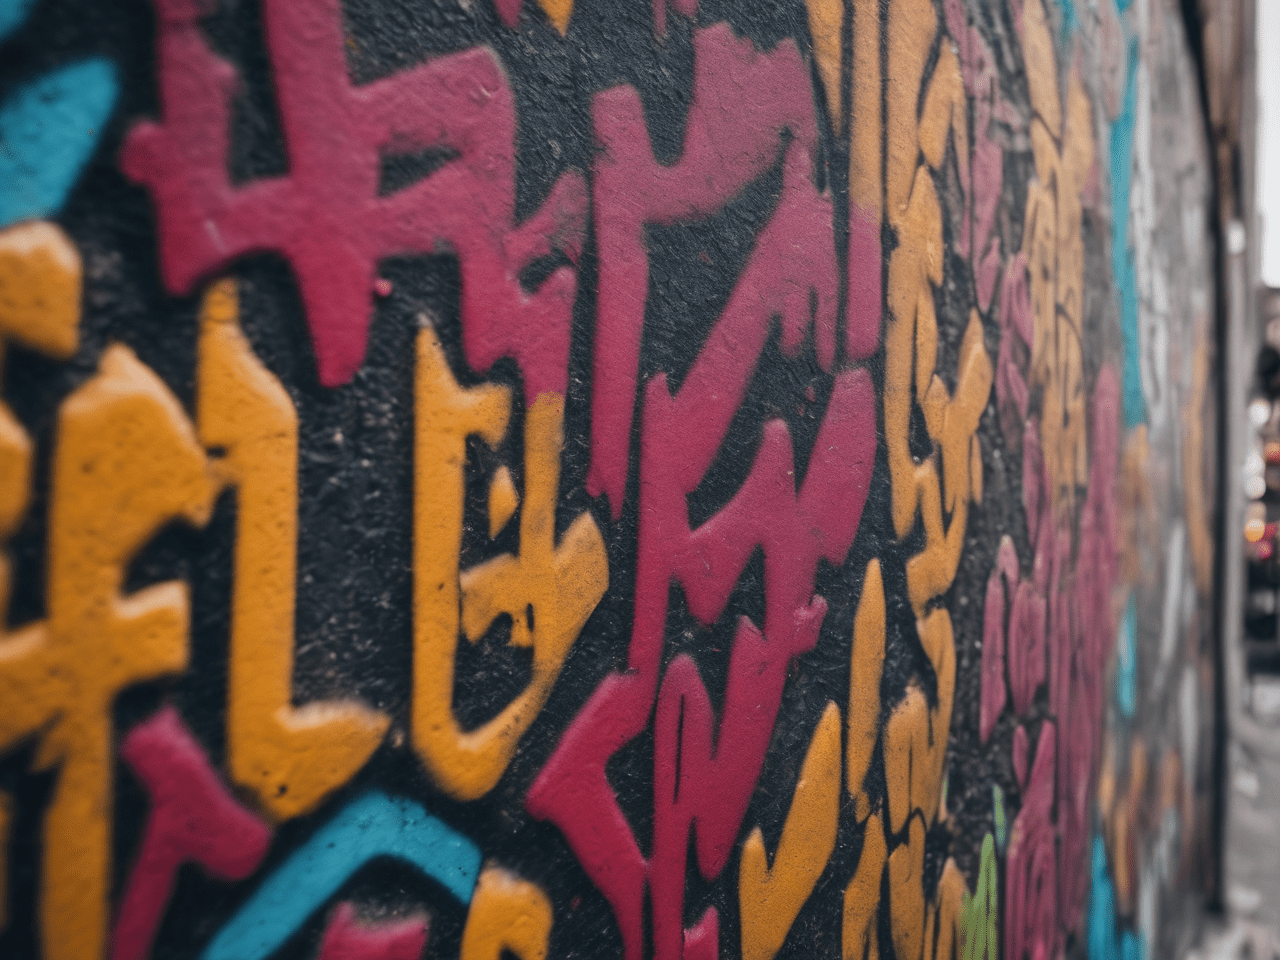 etched Graffiti Removal Techniches